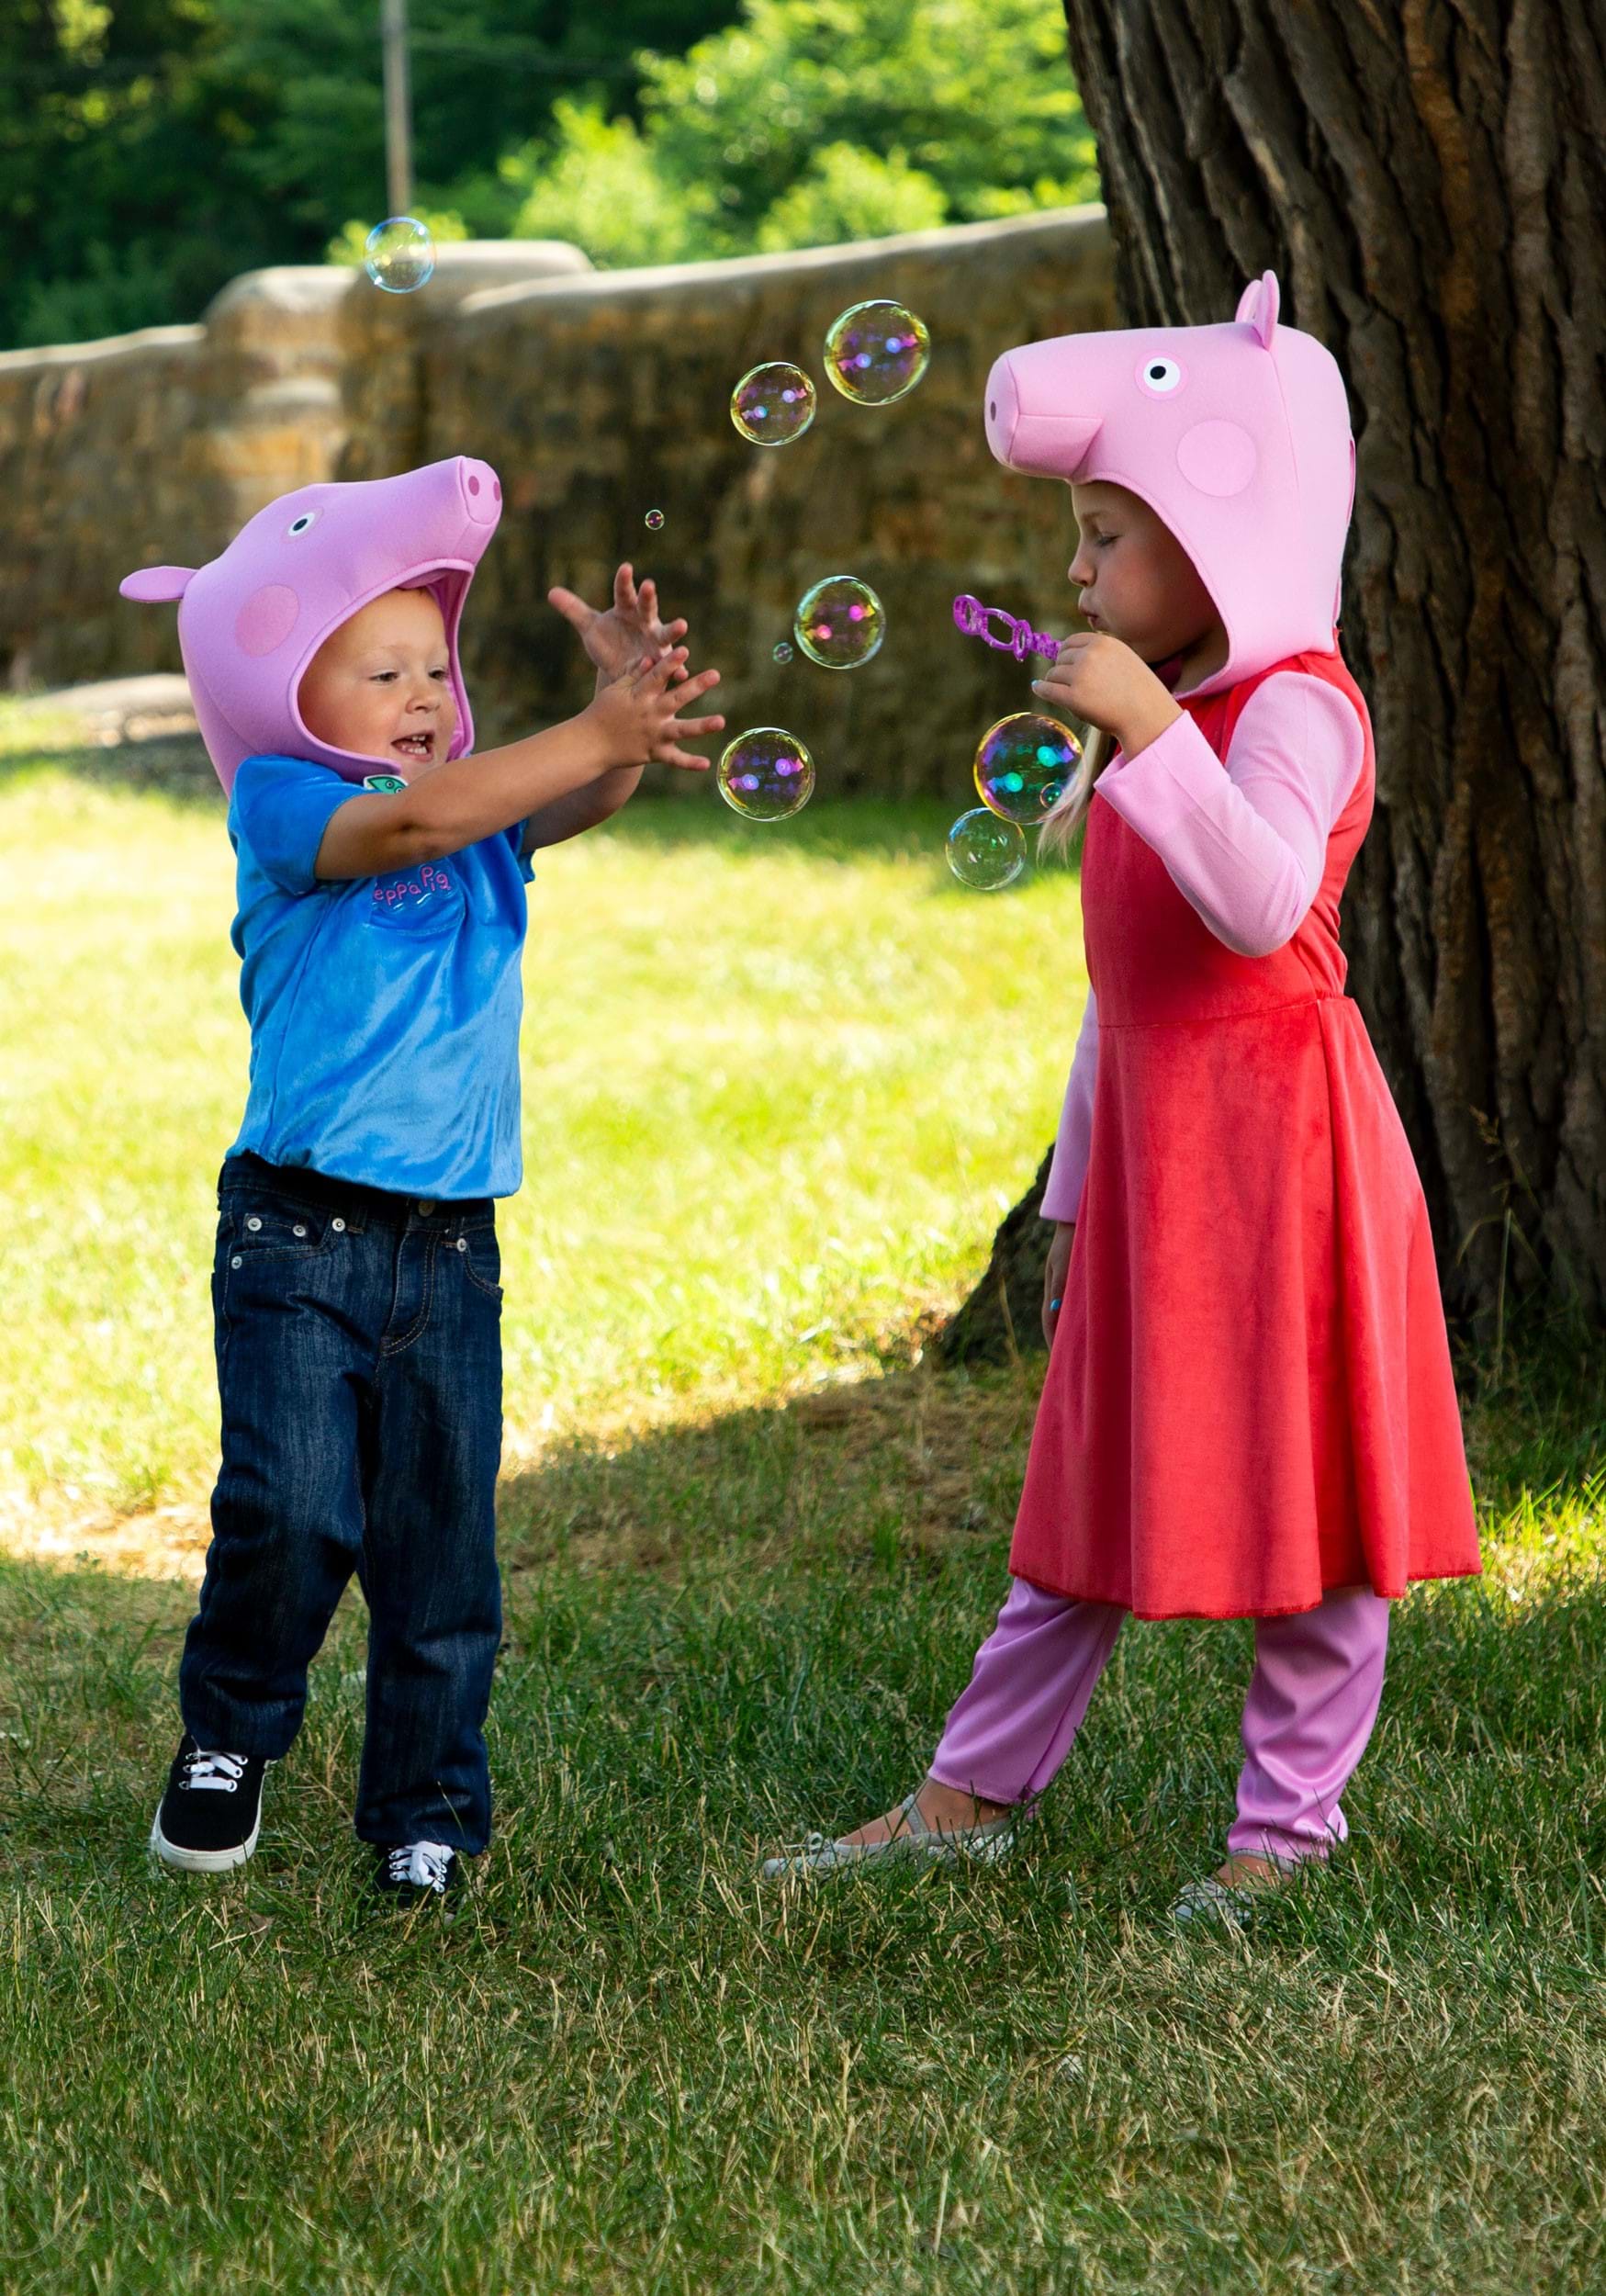 Kid's Classic Piggy Costume | Halloween Express